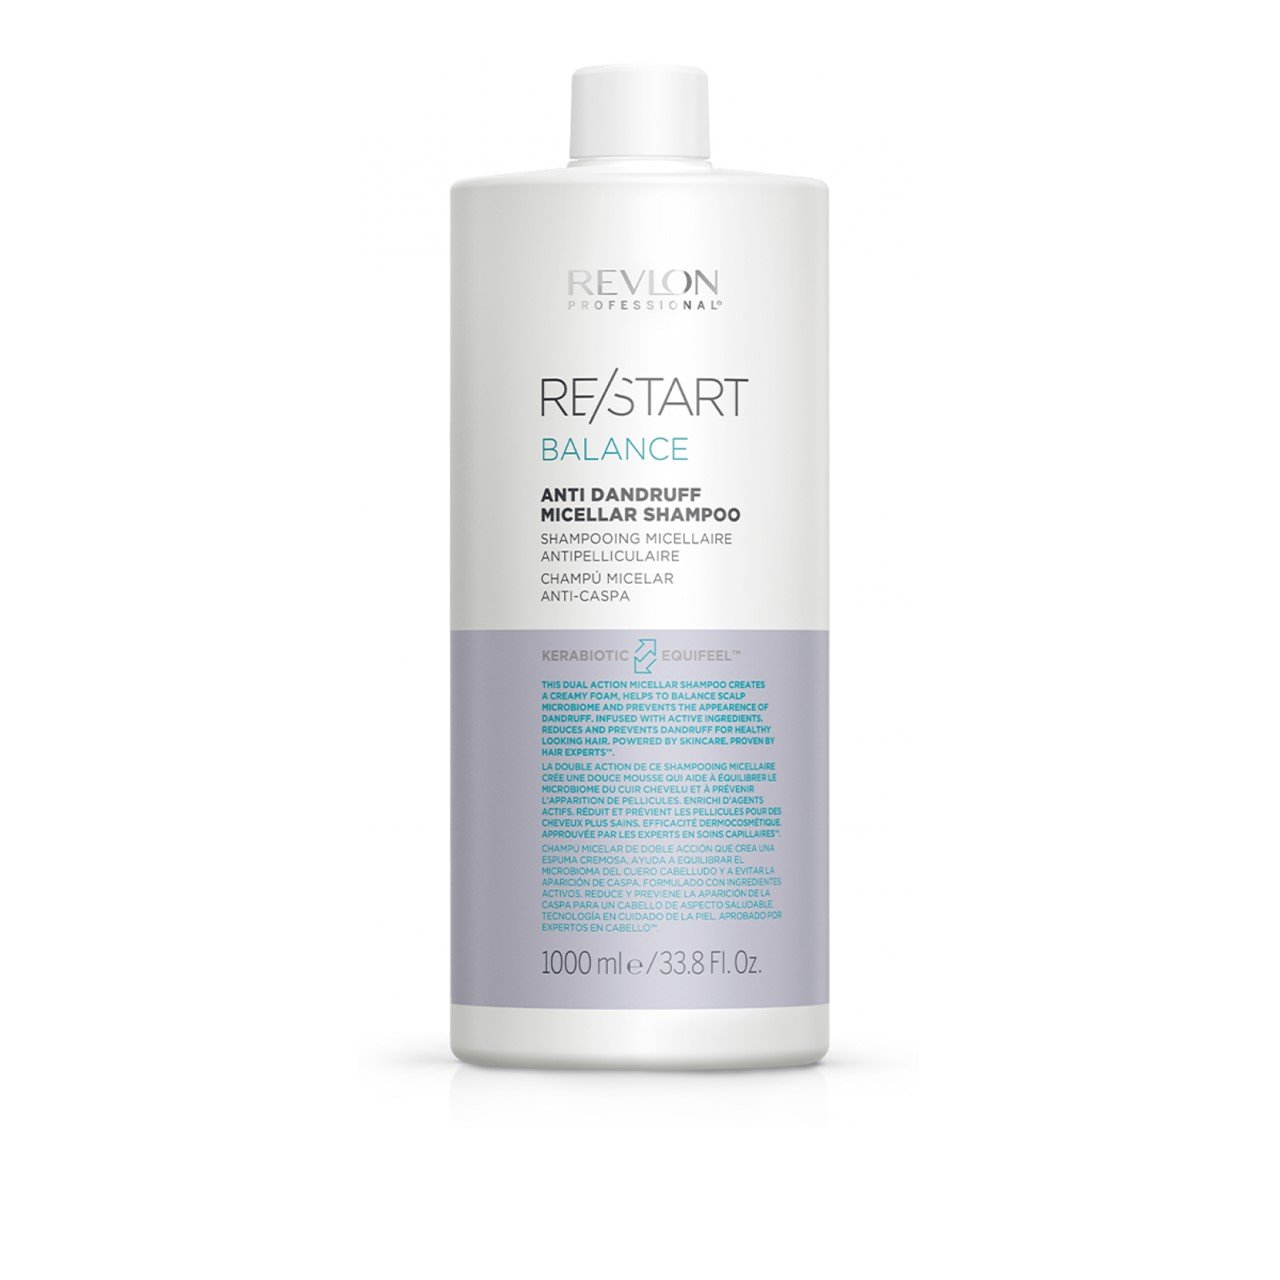 Revlon Professional Re/Start Balance Anti-Dandruff Shampoo 1L